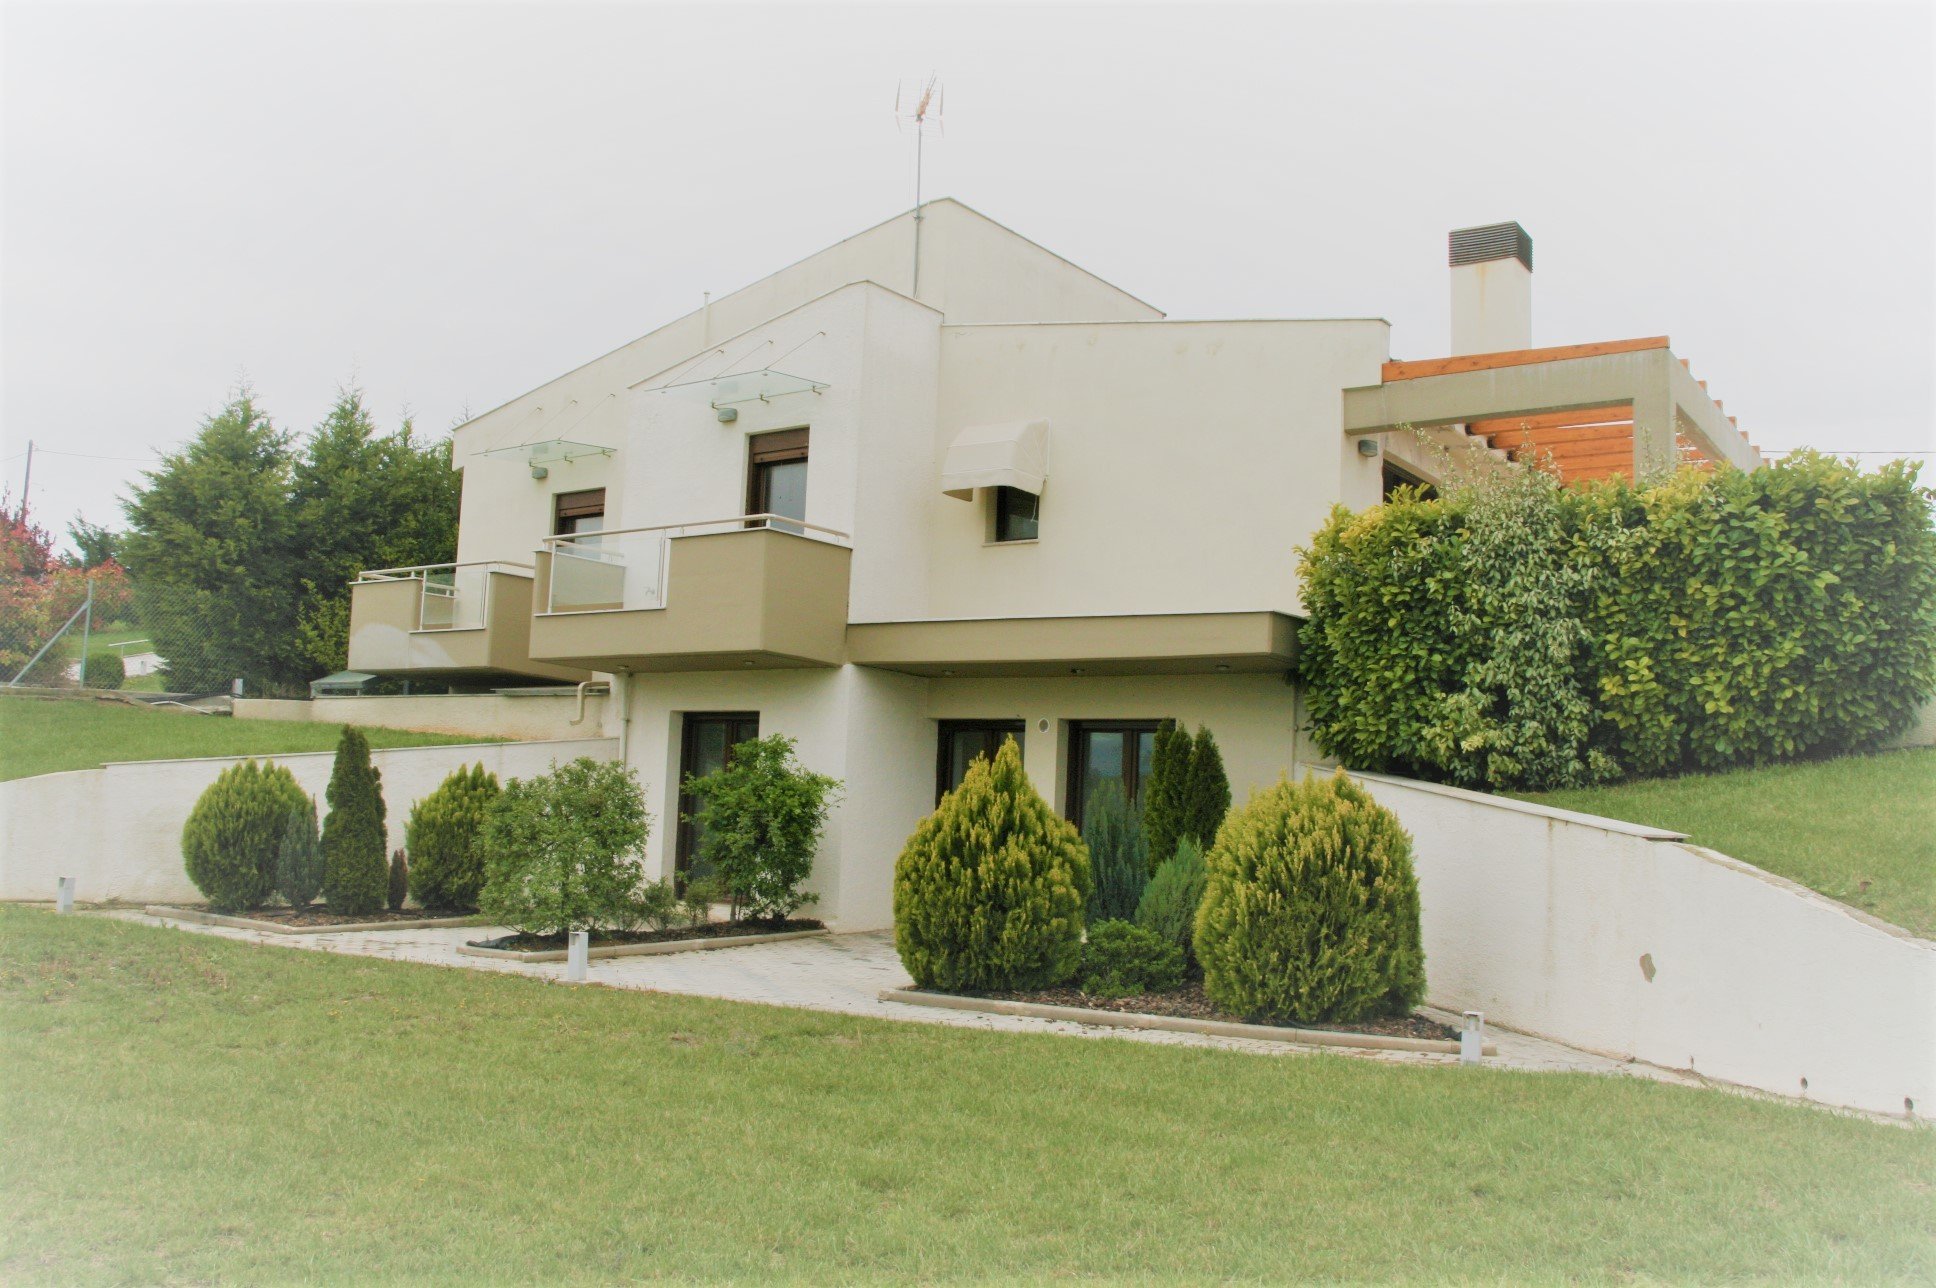 Residential complex of modern villas in Thessaloniki, Greece